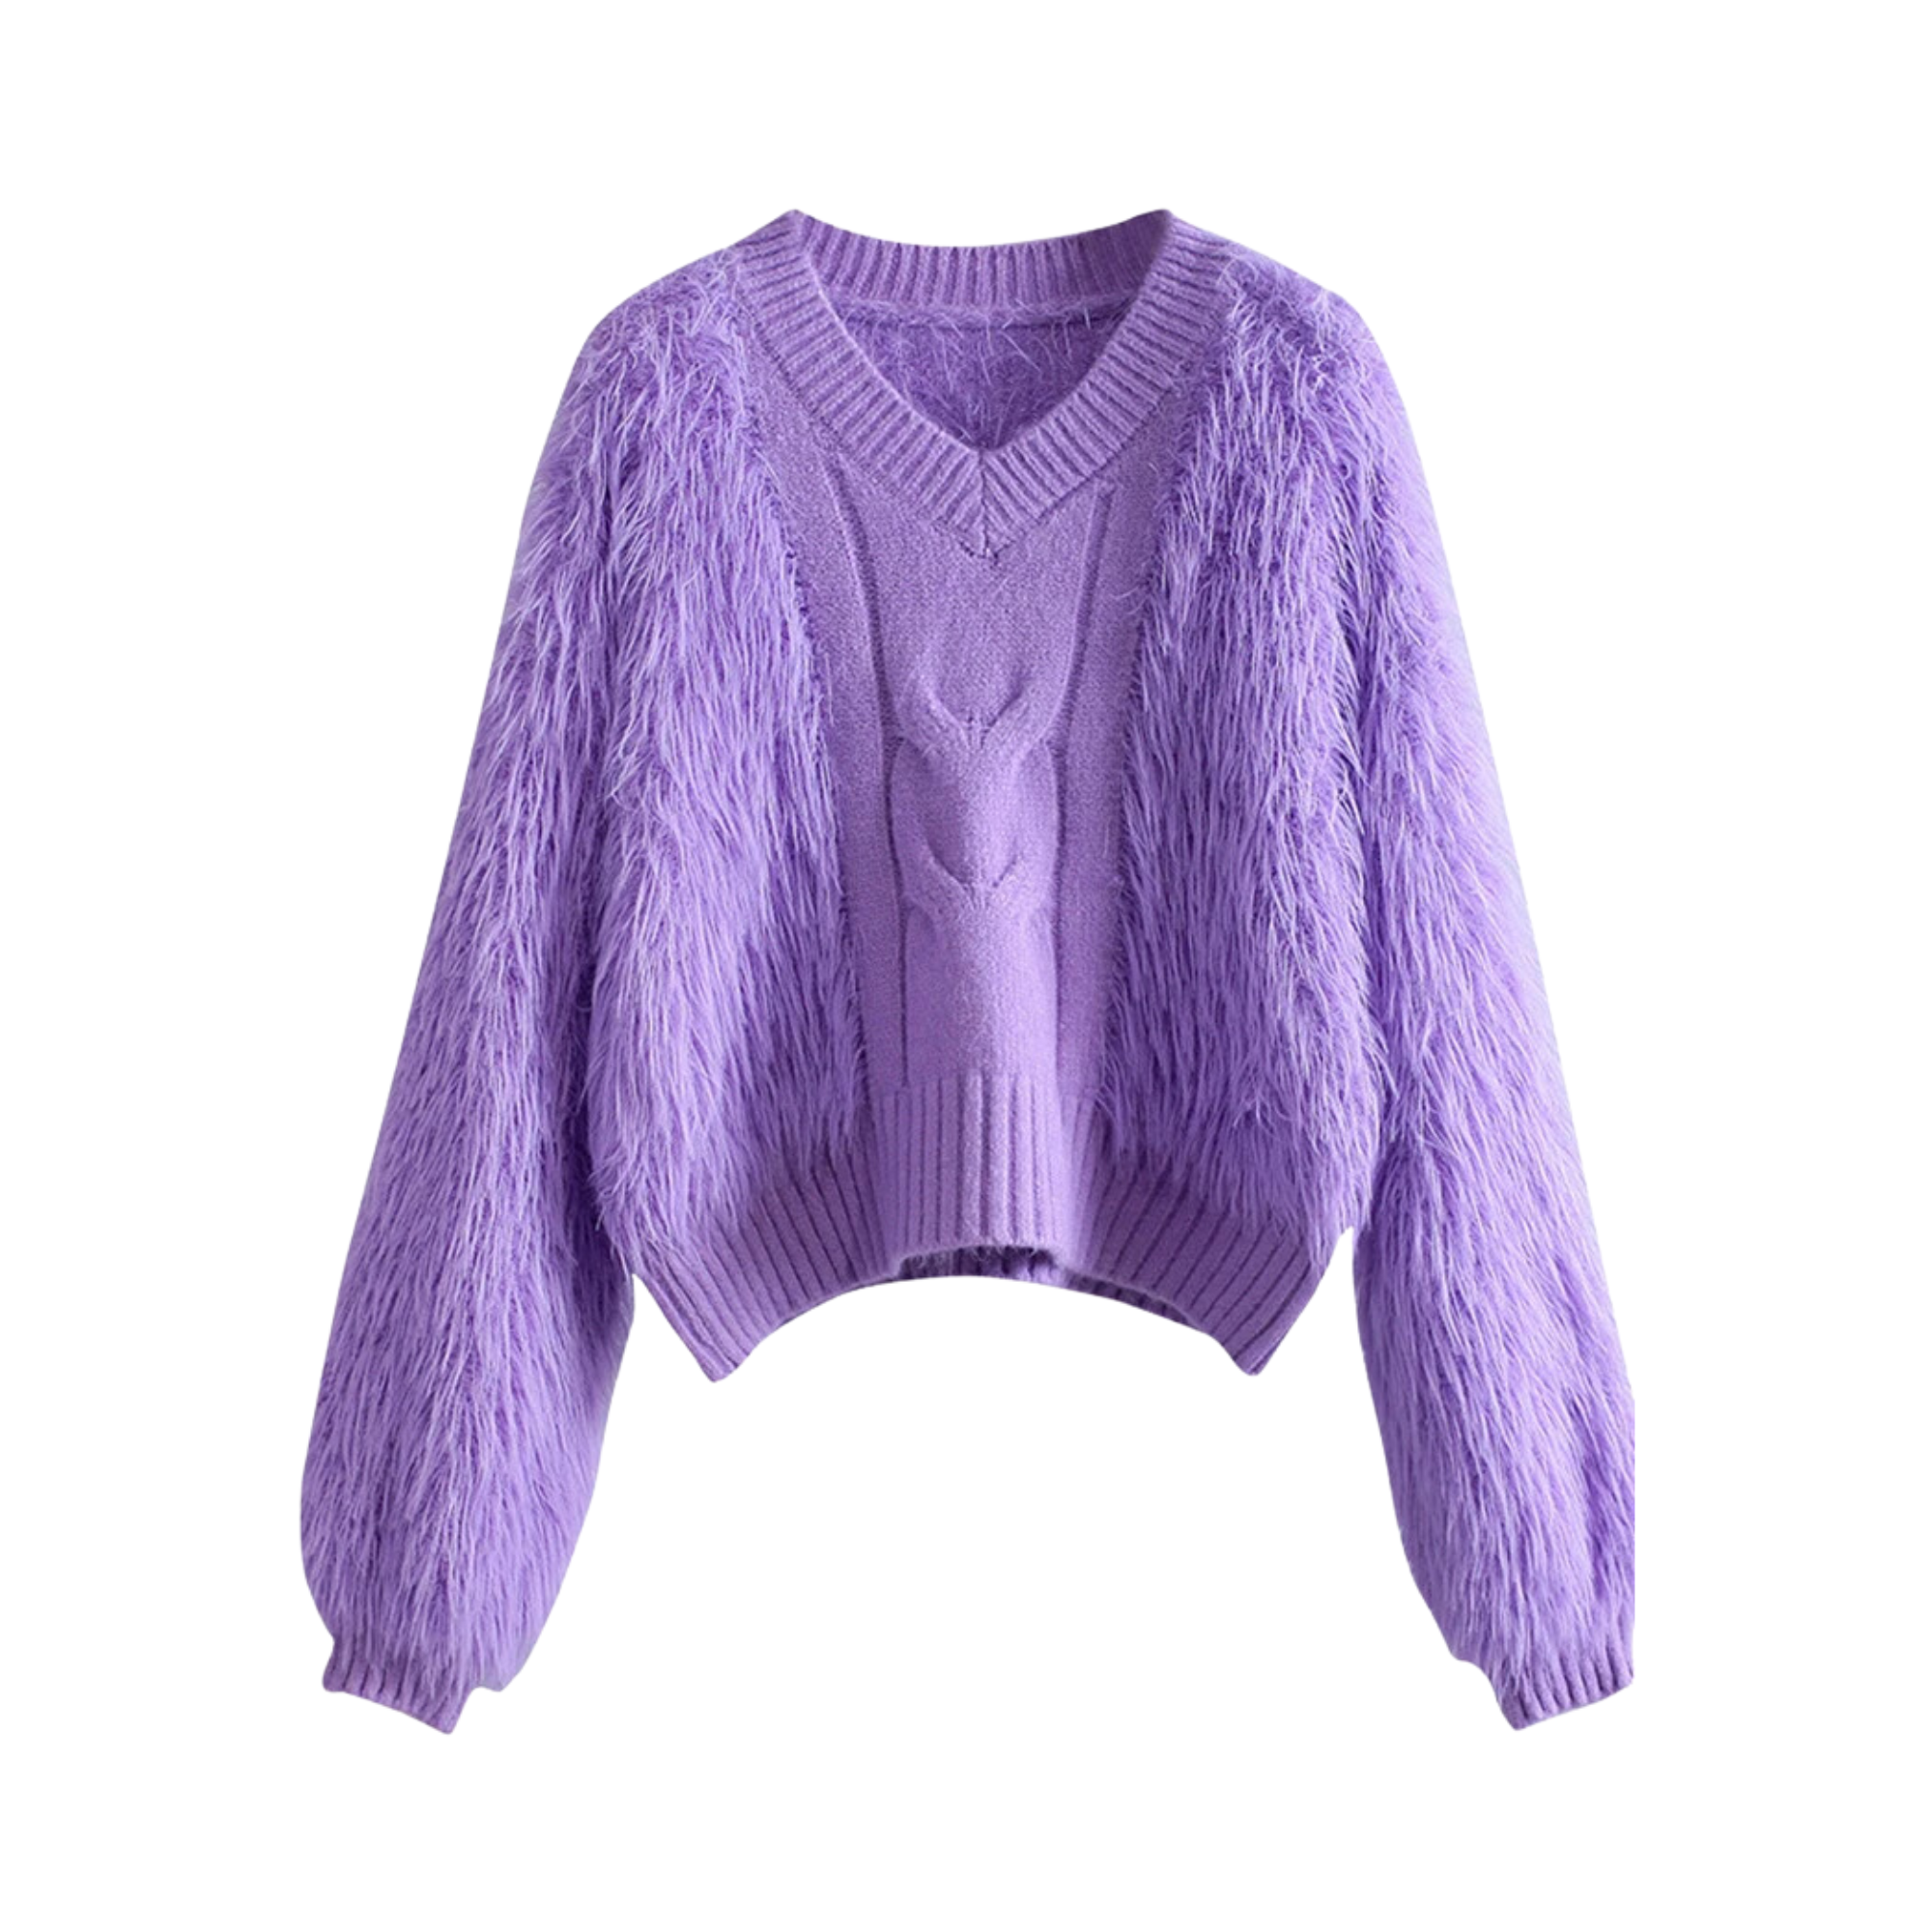 Fuzzy Lantern Sleeves Knit Sweater - Pre Order: Ships Feb 29